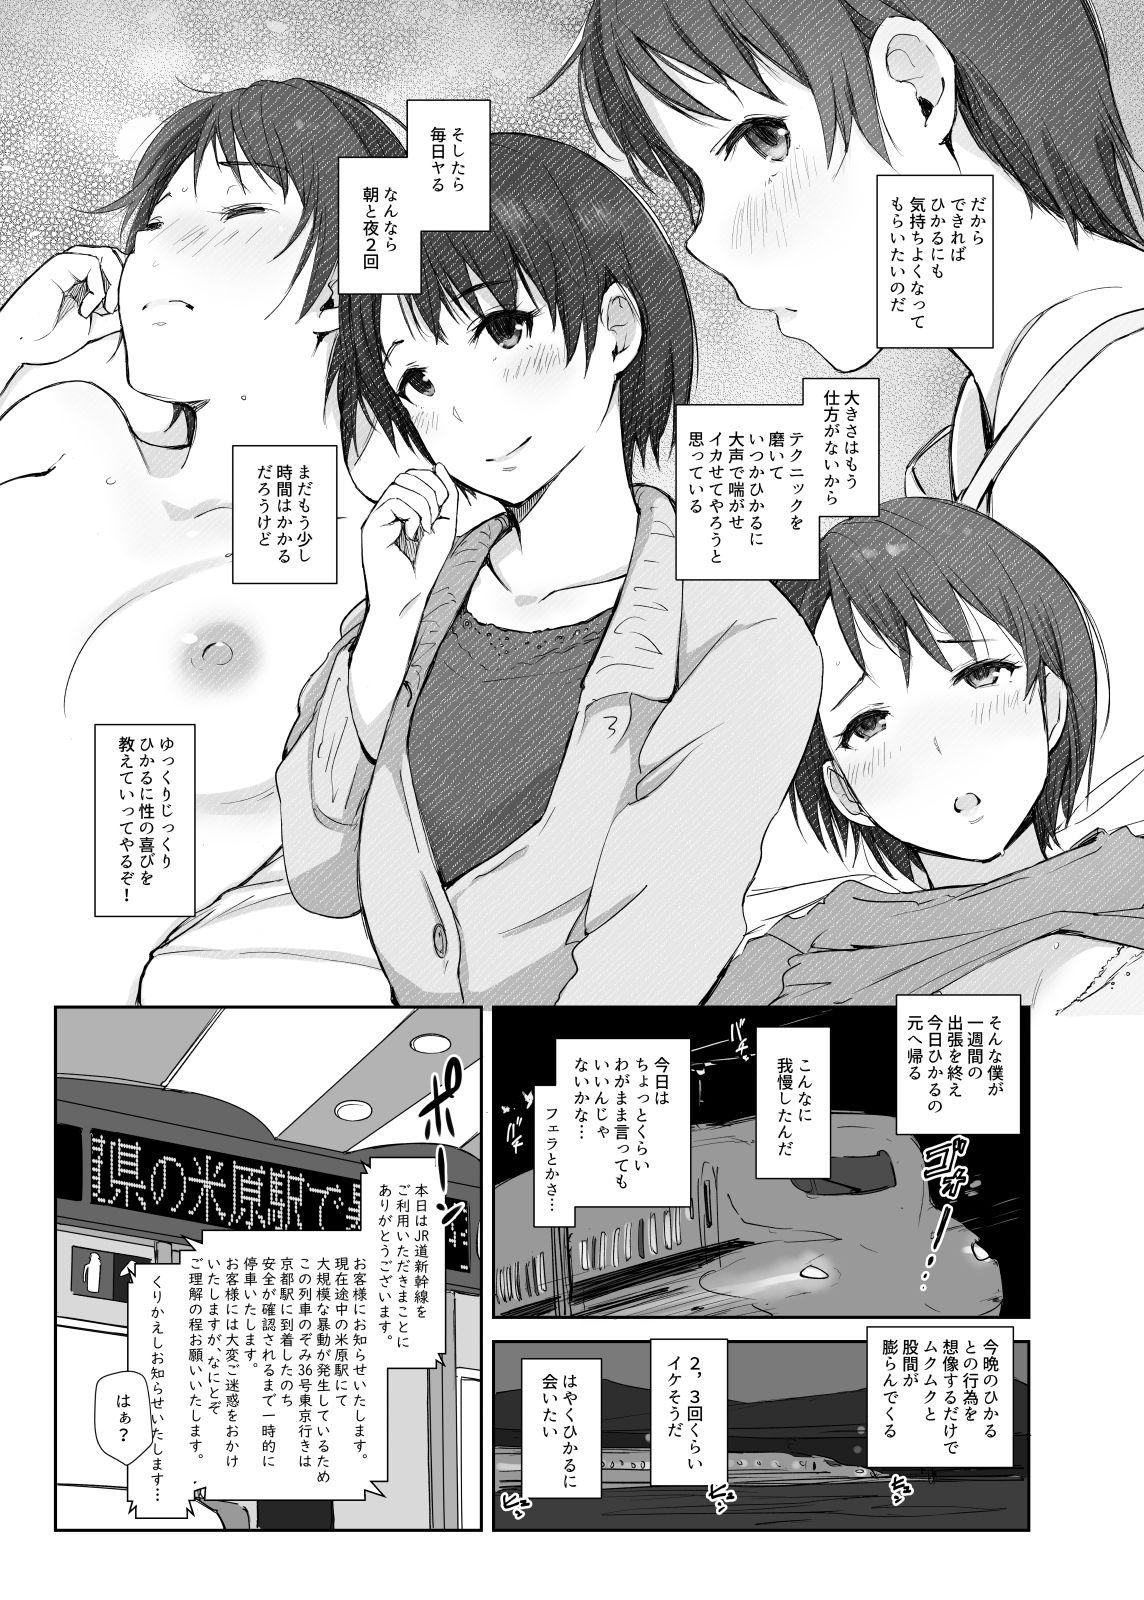 Load Saikou ni Tabegoro no Yoru - I made her mine last night. - Original Com - Page 4